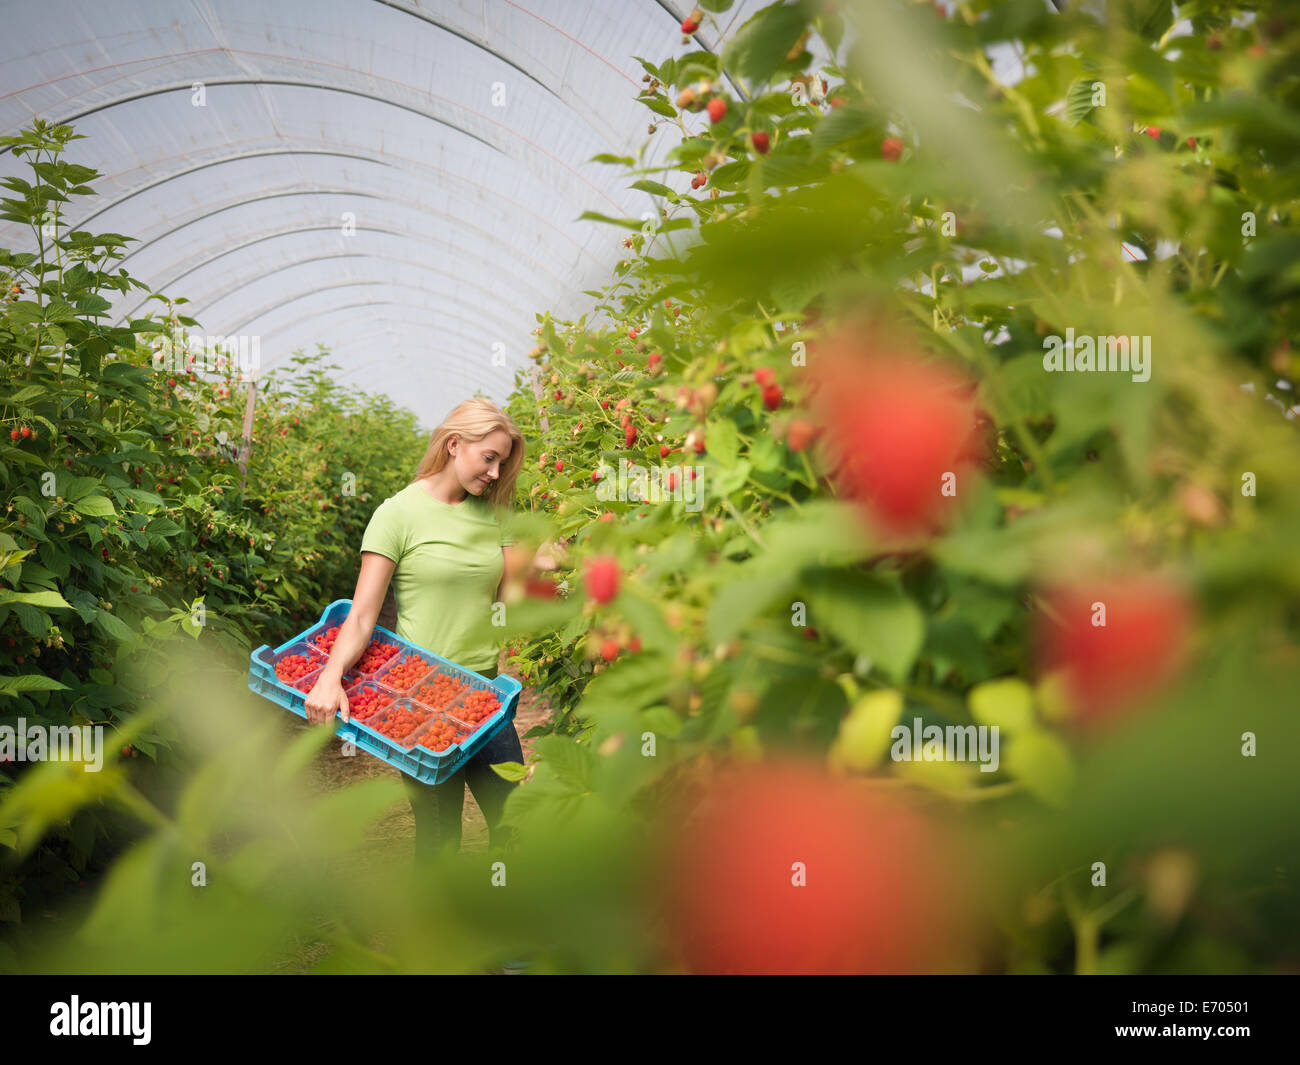 Worker picking raspberries in fruit farm Stock Photo